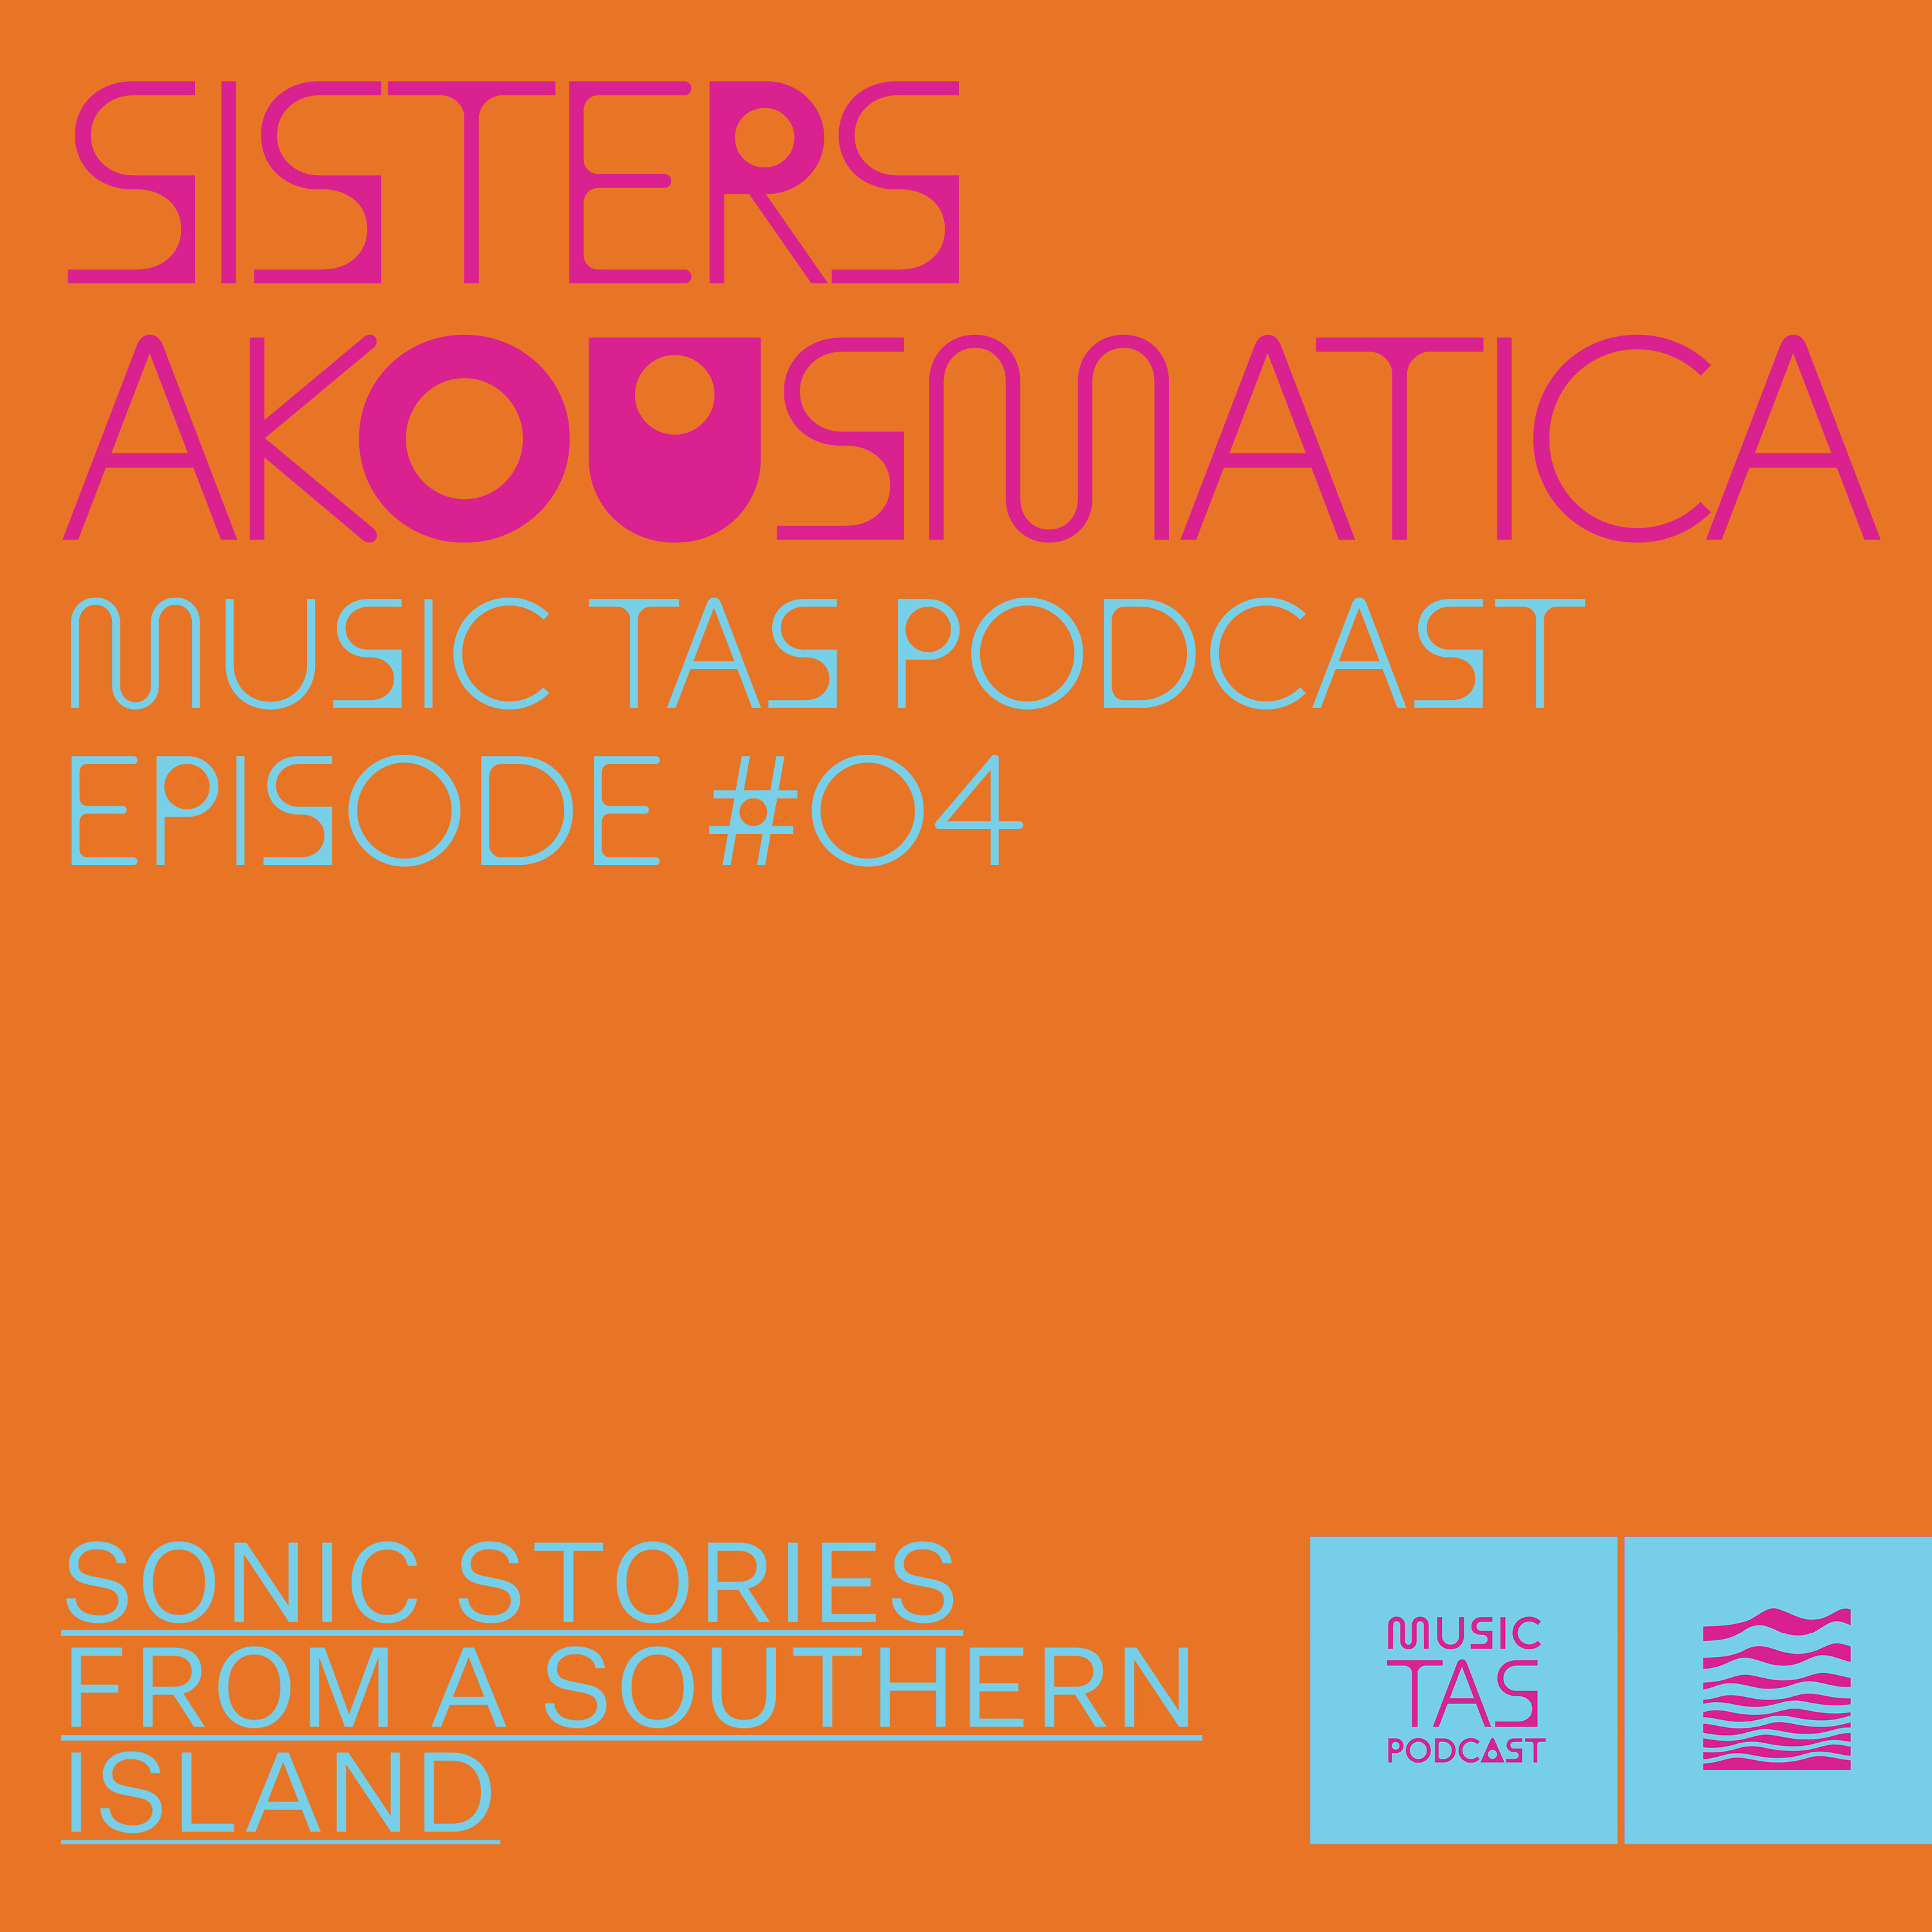 Music Tas Podcast #04 - Sisters Akousmatica